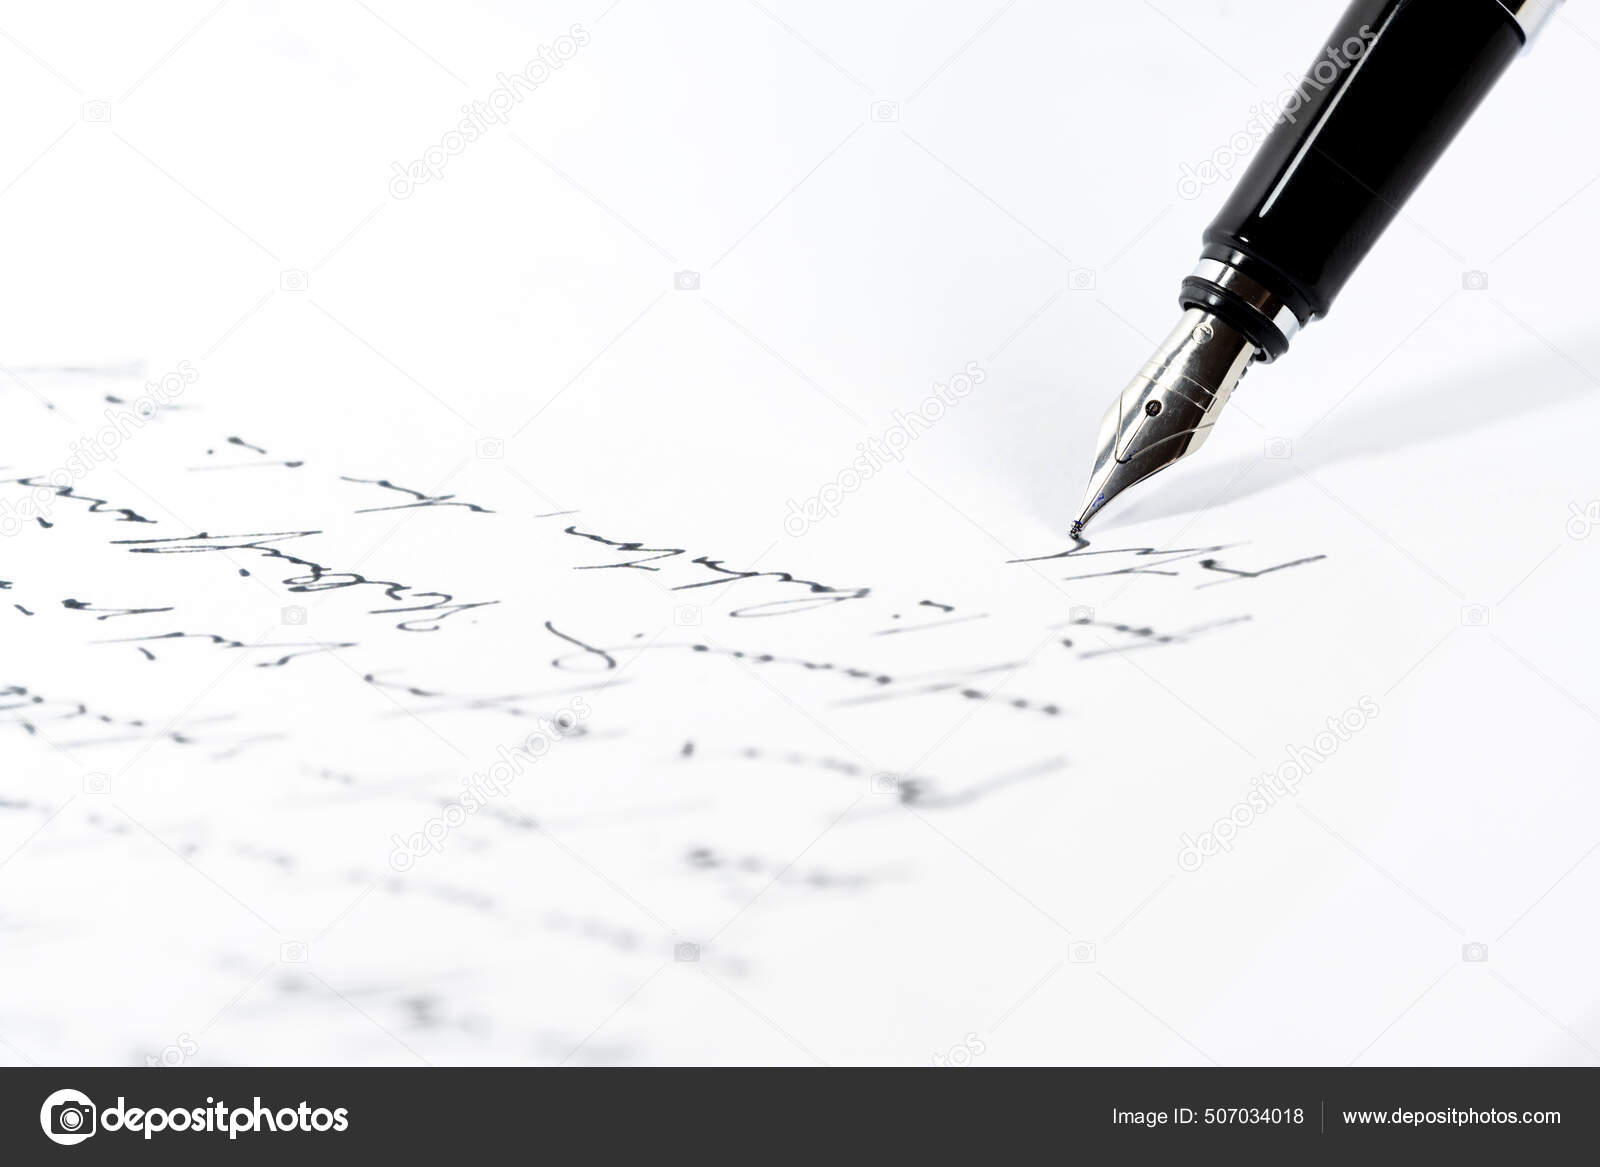 https://st2.depositphotos.com/3765293/50703/i/1600/depositphotos_507034018-stock-photo-black-fountain-pen-writing-letter.jpg